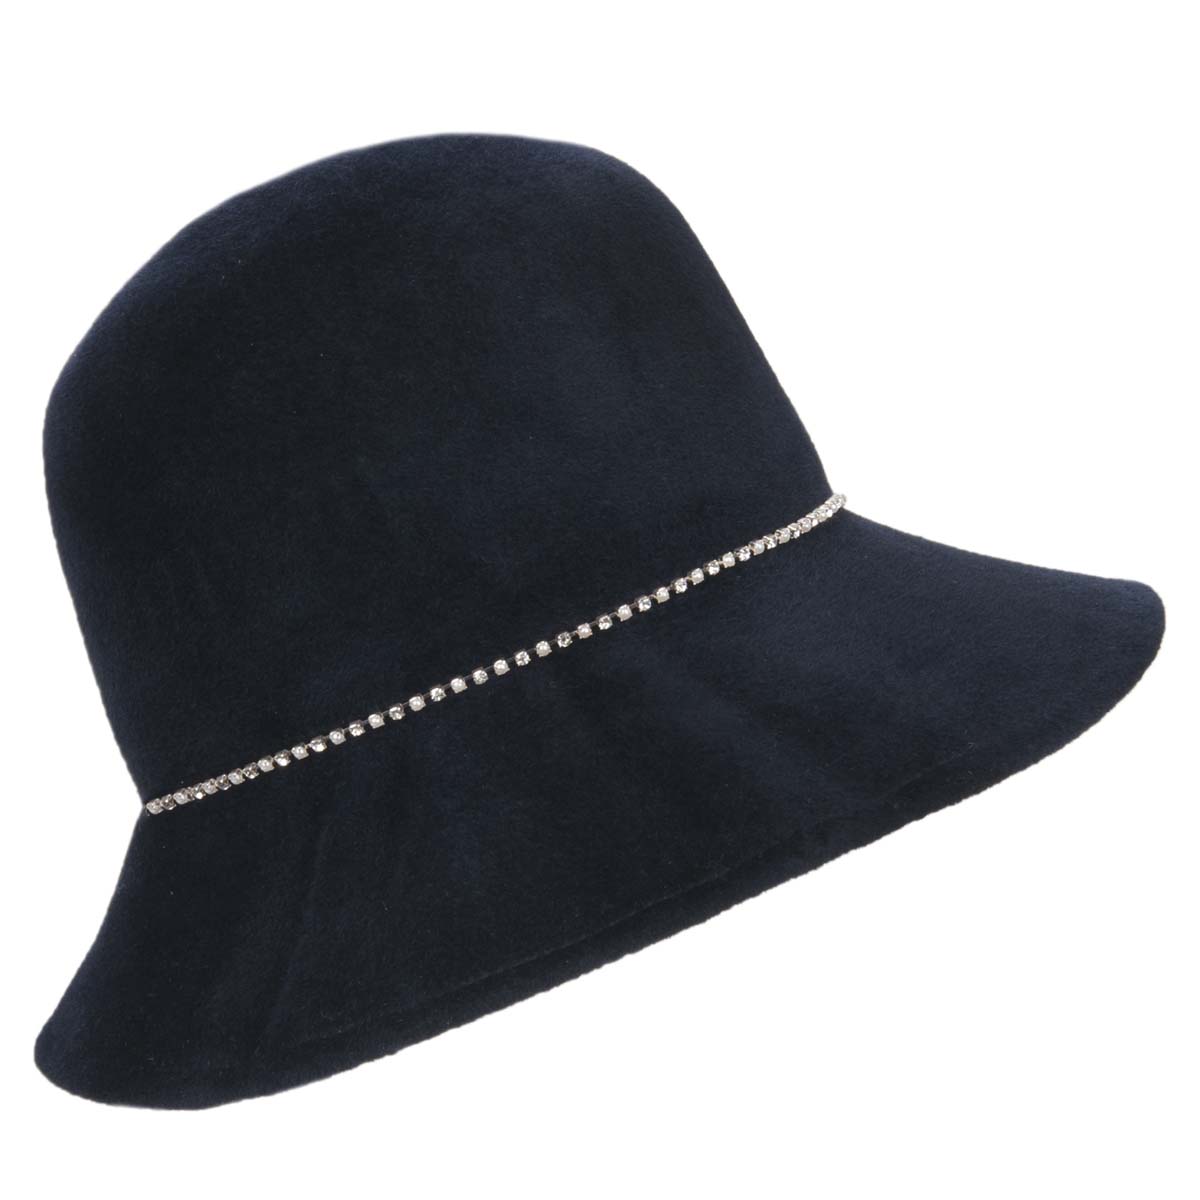 Trendy hat for women